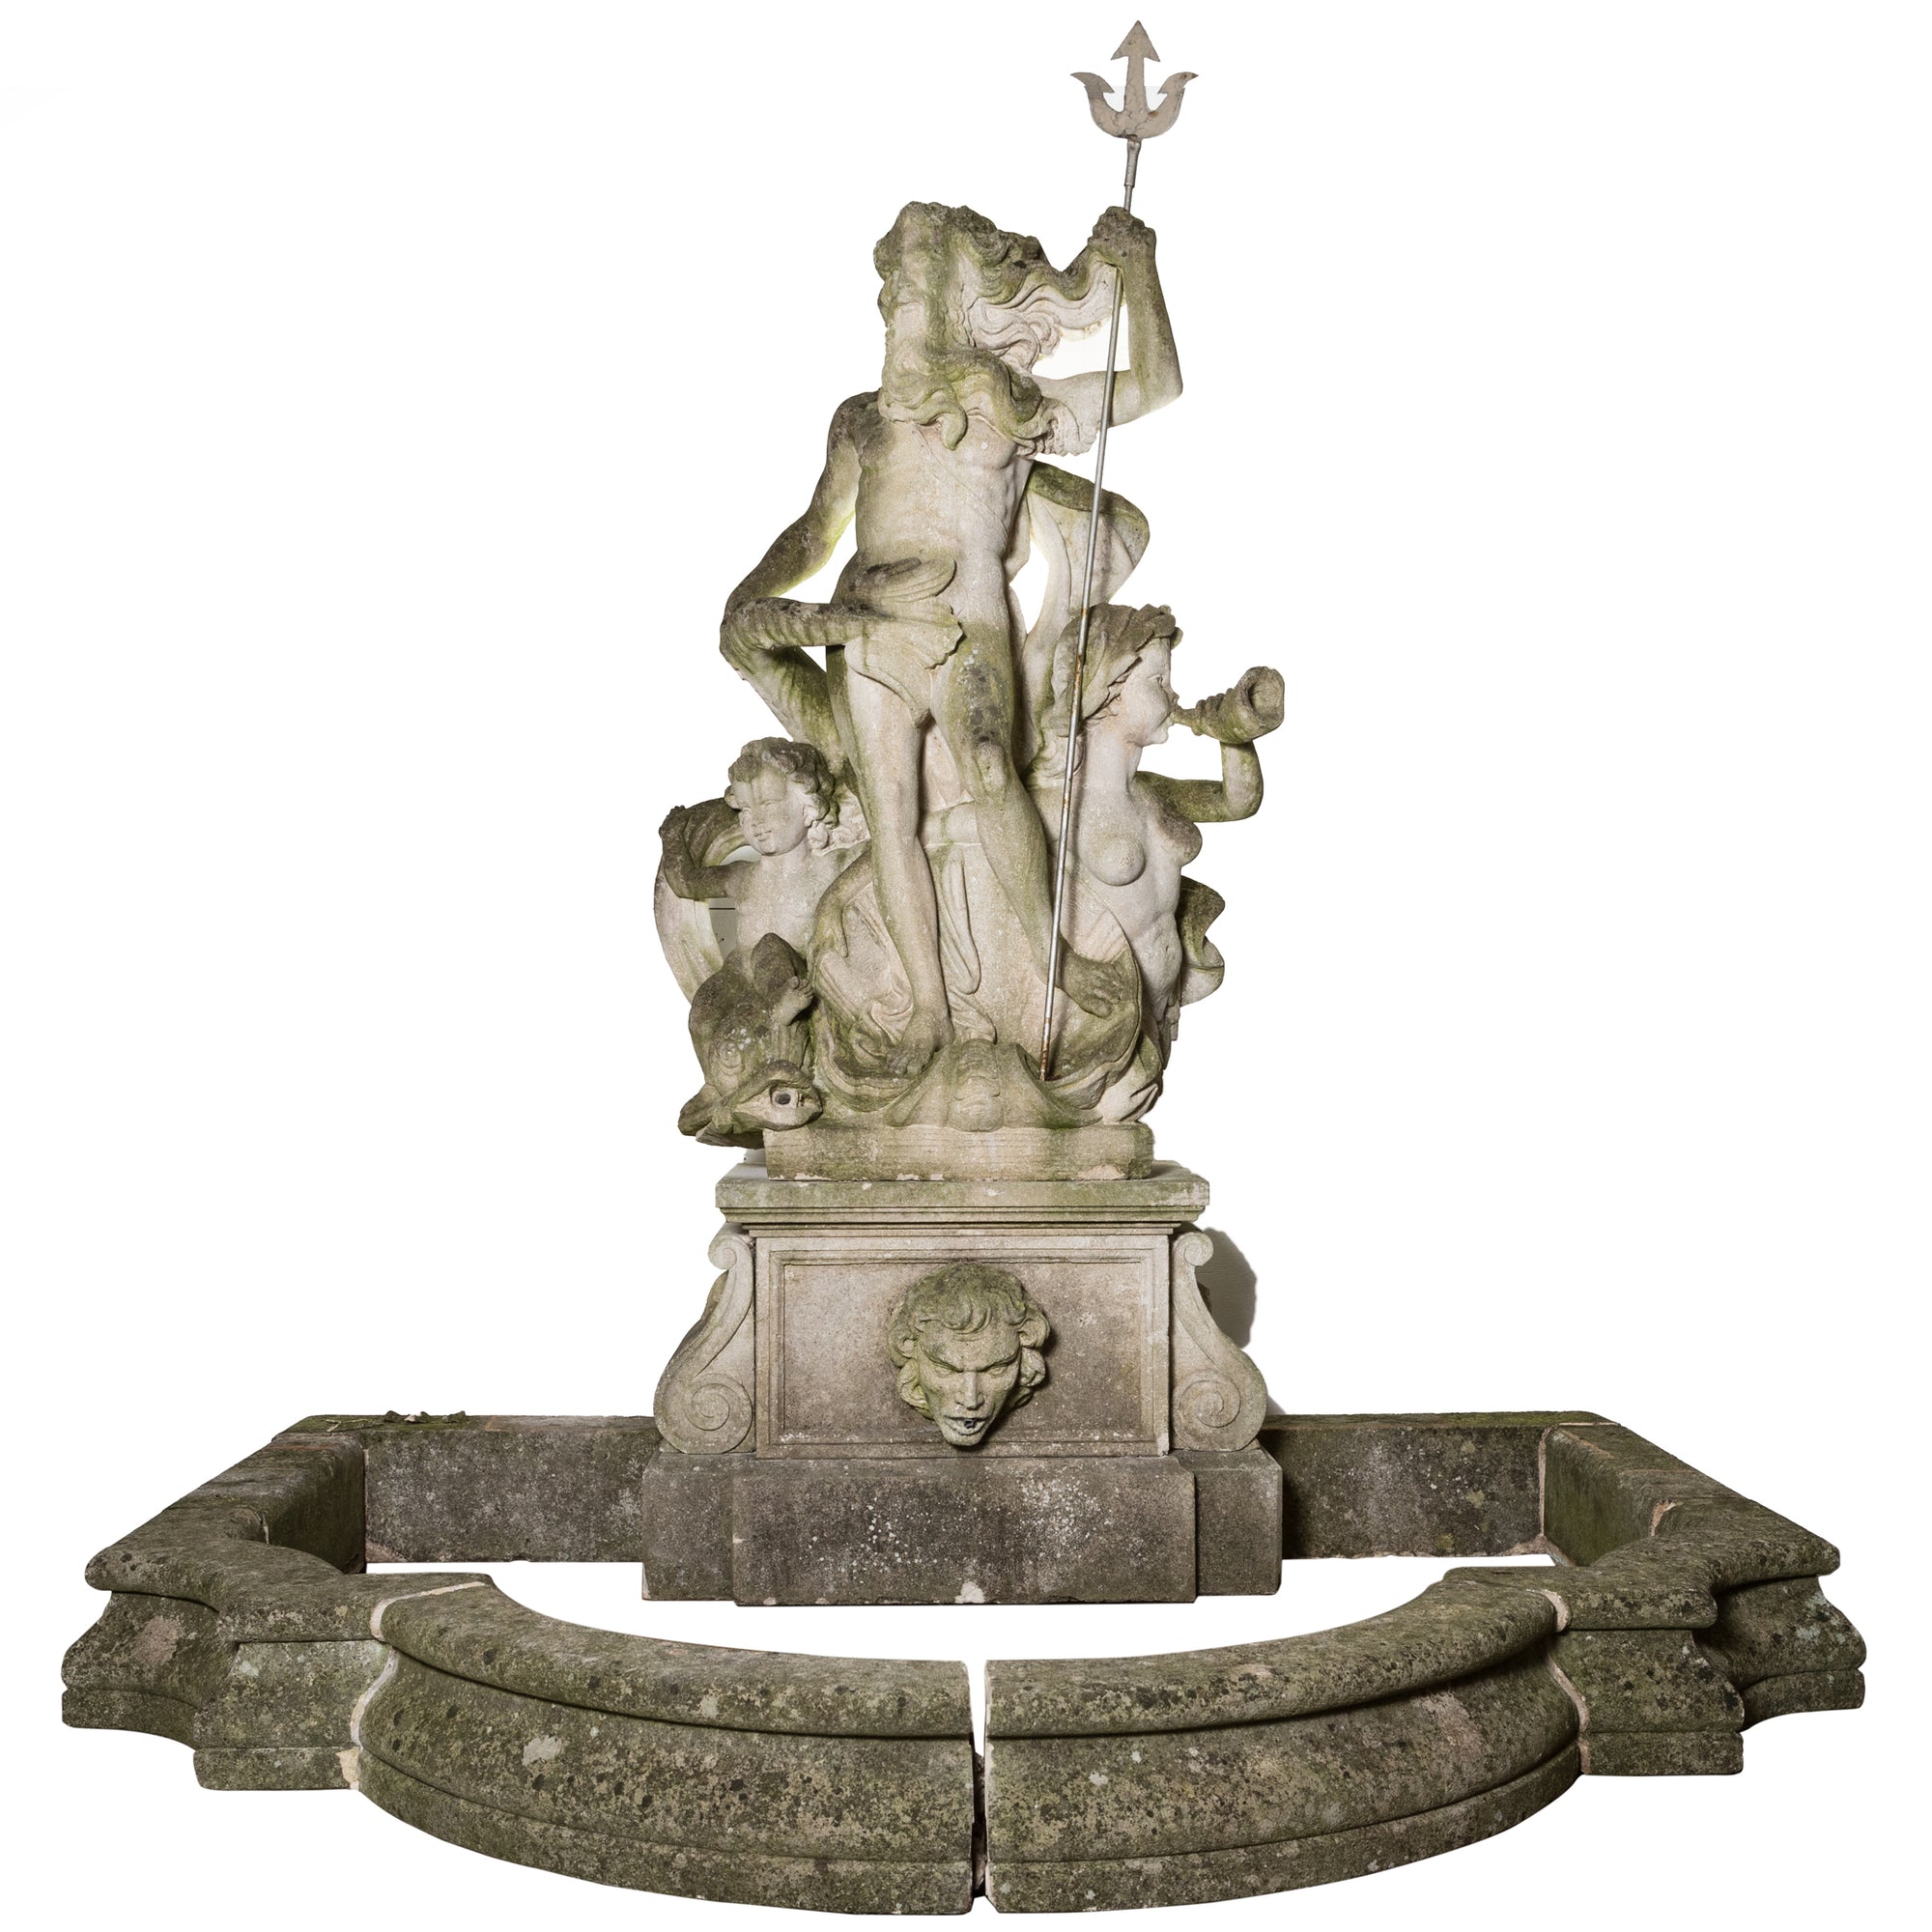 Spectacular Portland Stone Neptune / Poseidon Statue Fountain | The Architectural Forum